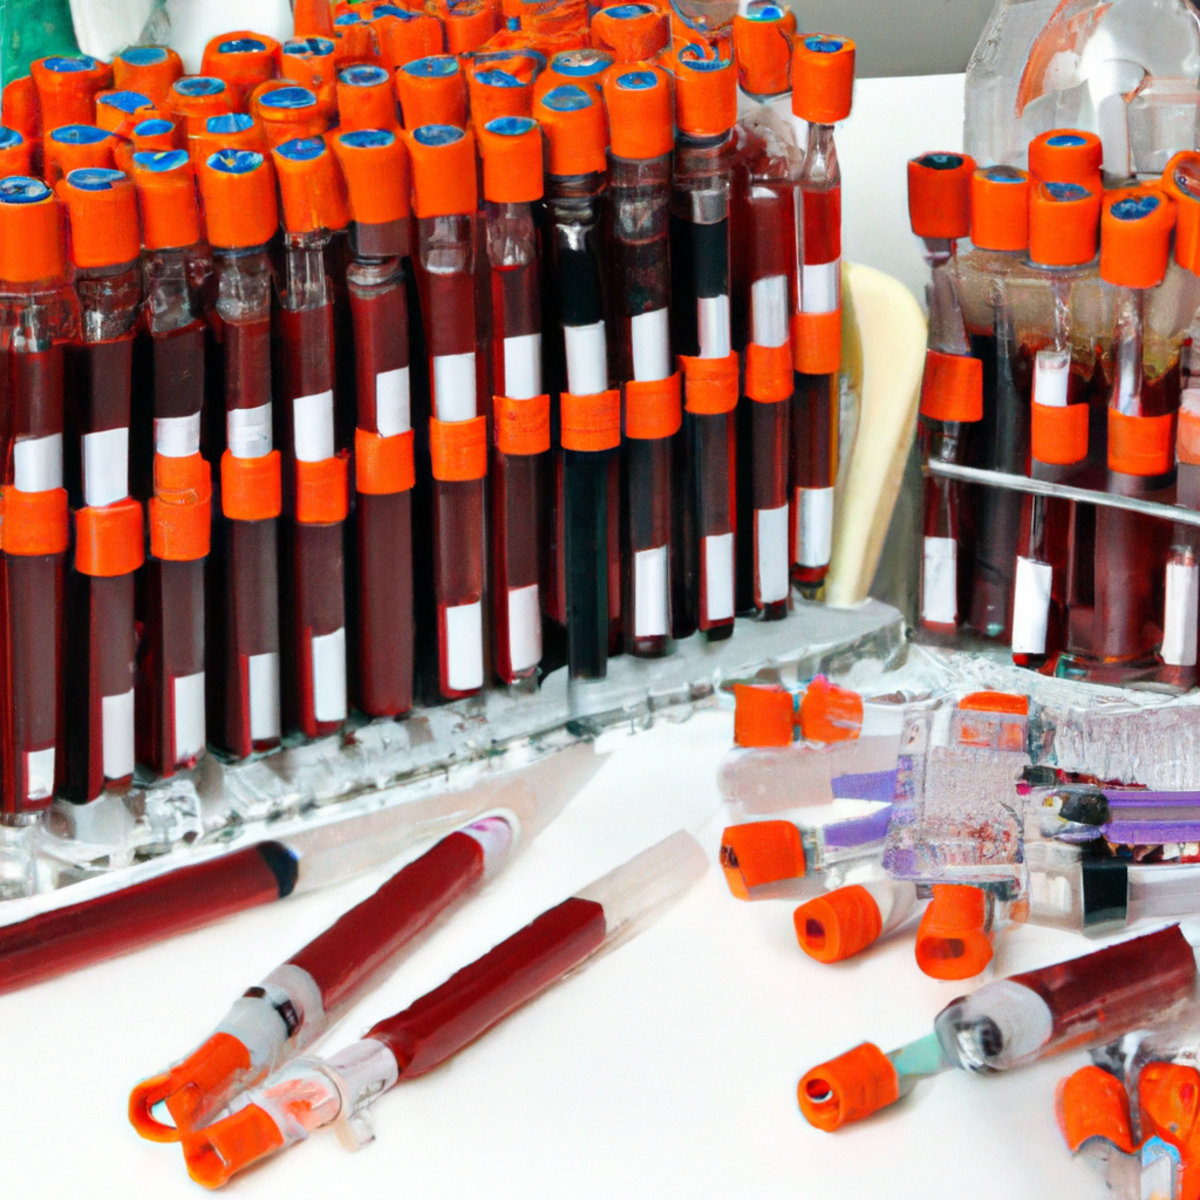 Medical equipment symbolizing hemochromatosis journey: blood-filled vials, syringes, and test tubes on a white table.